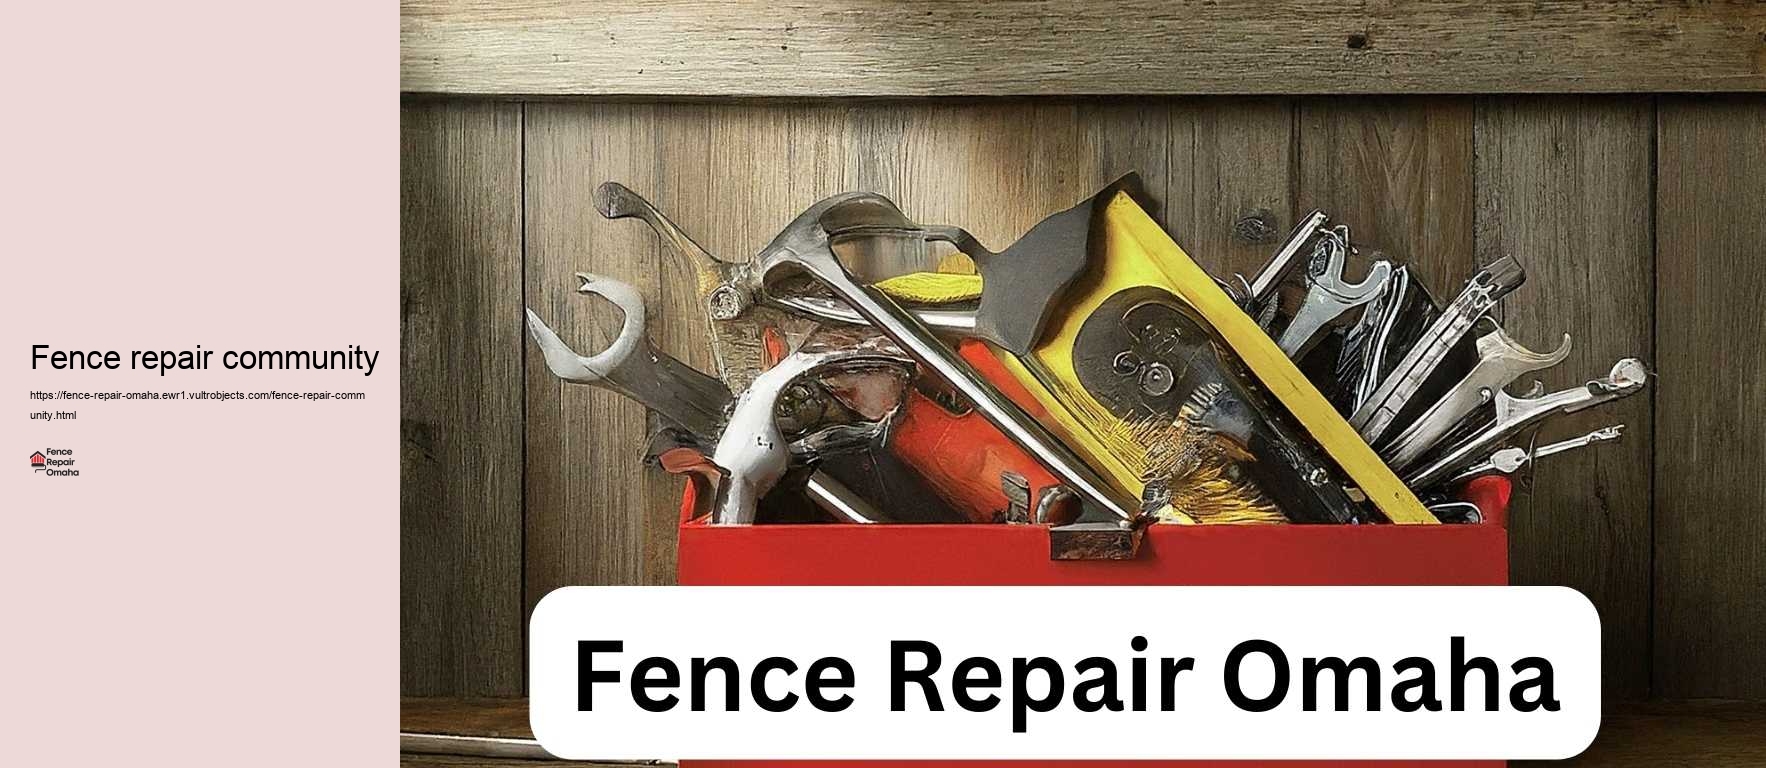 Fence repair community